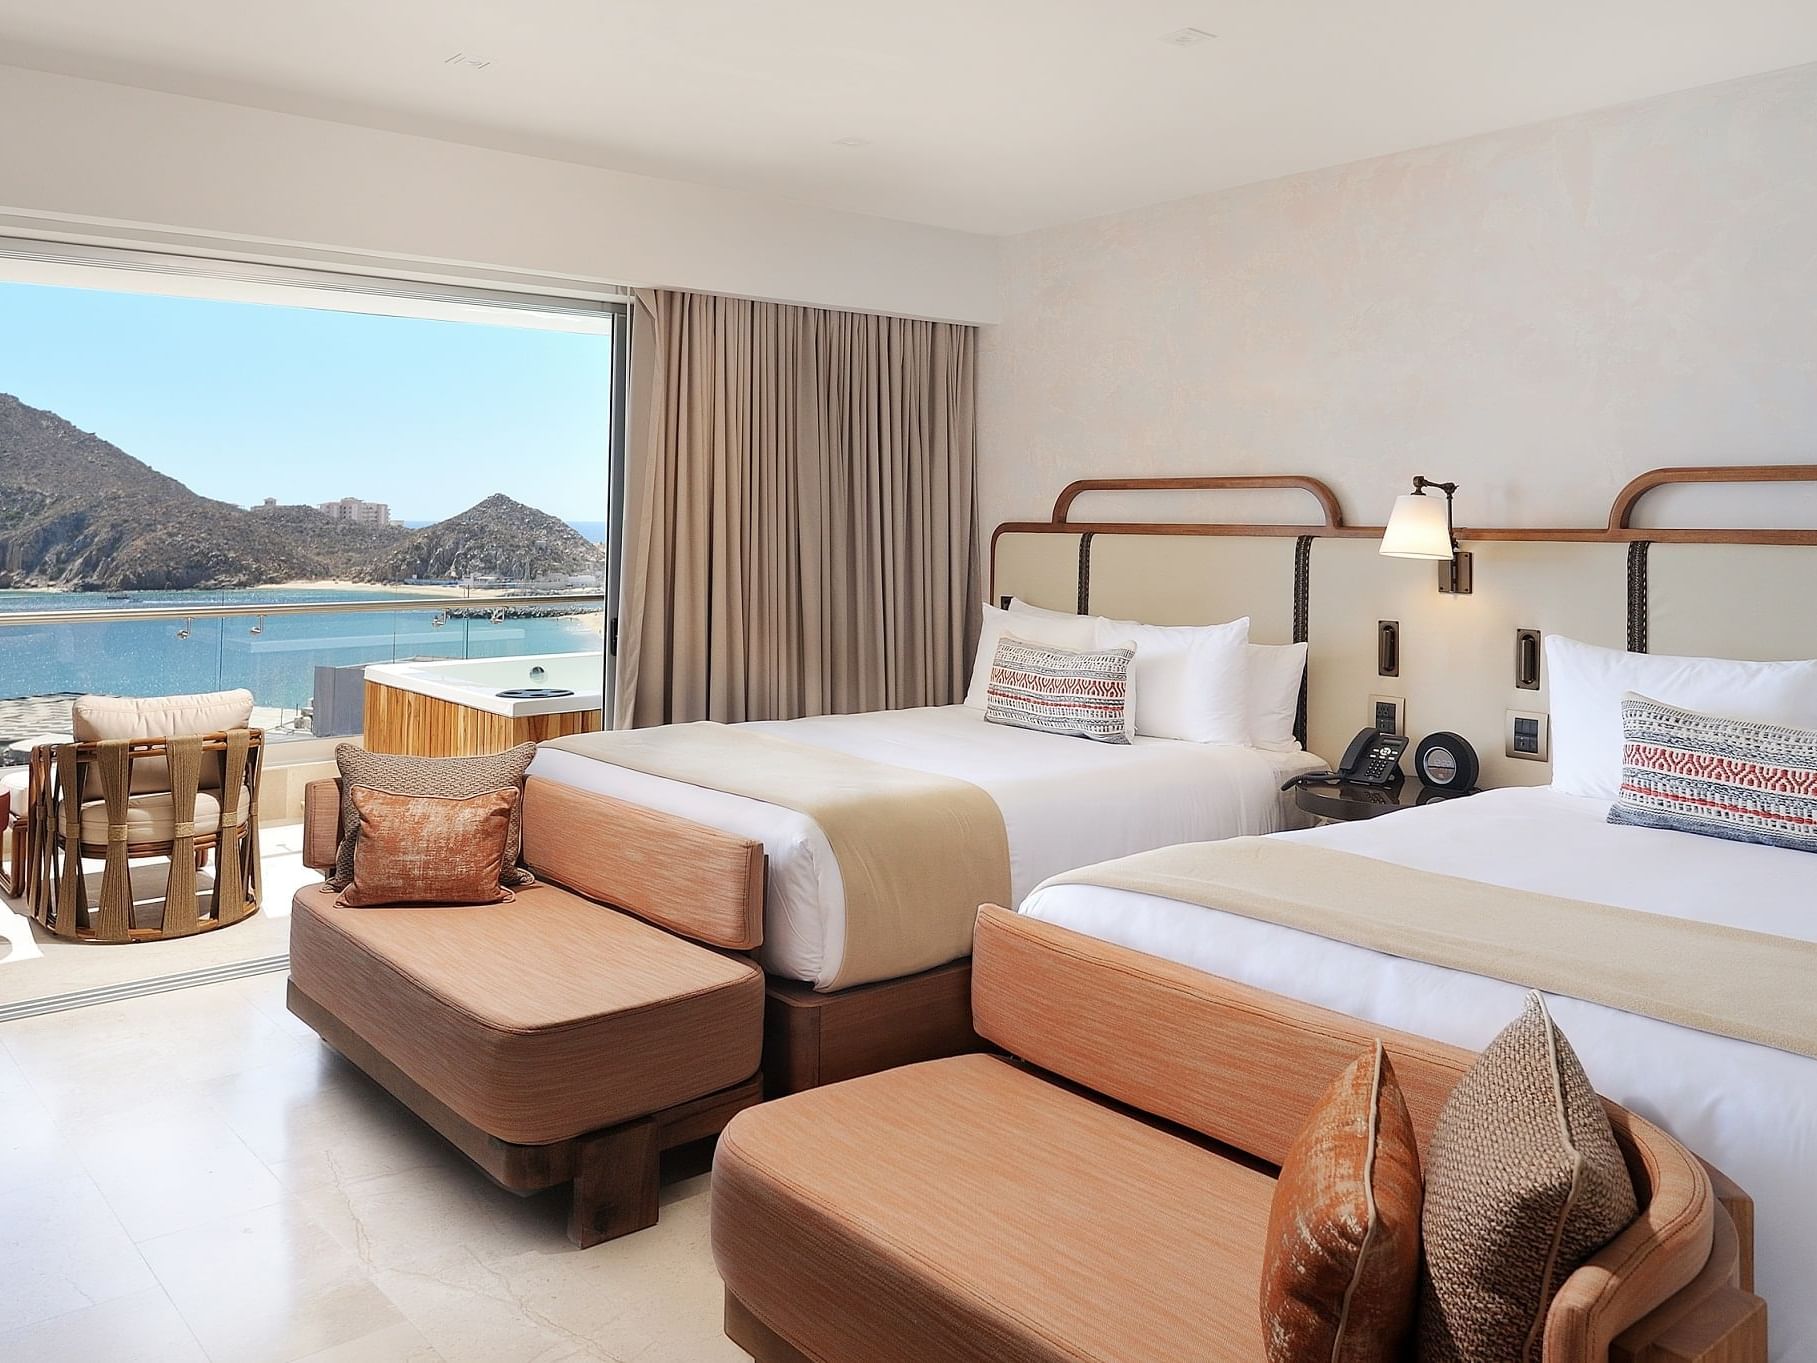 Infinity Two Queens Suite bedroom at Cabo villas beach resort